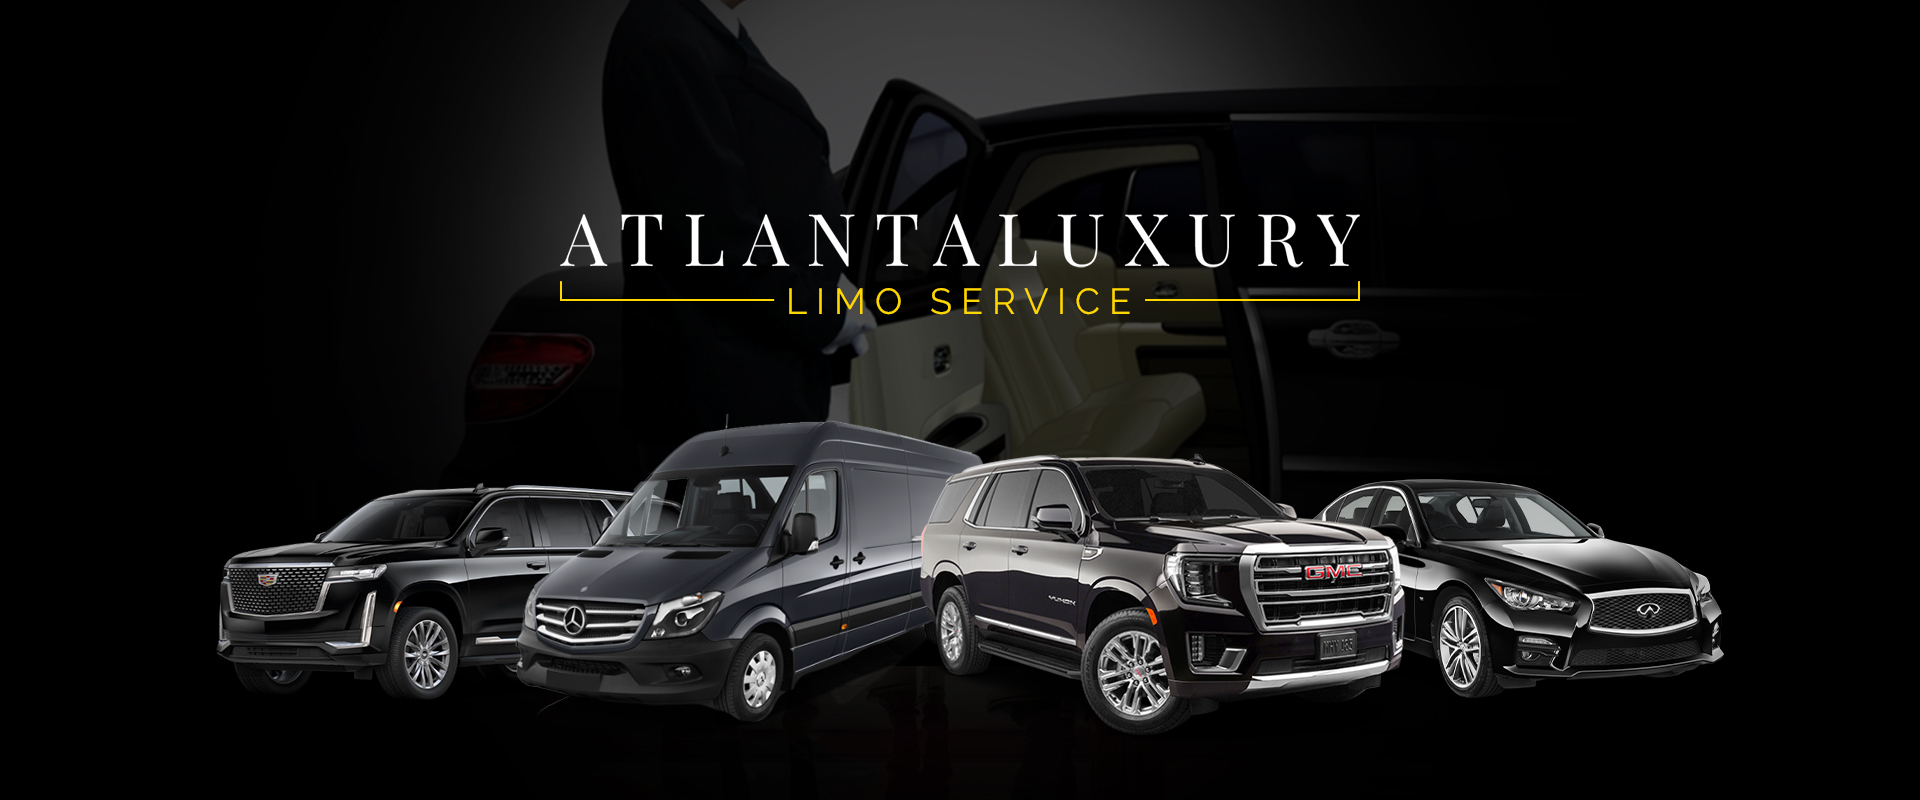 Atlanta Luxury Limousine Service - Trustee Transportation